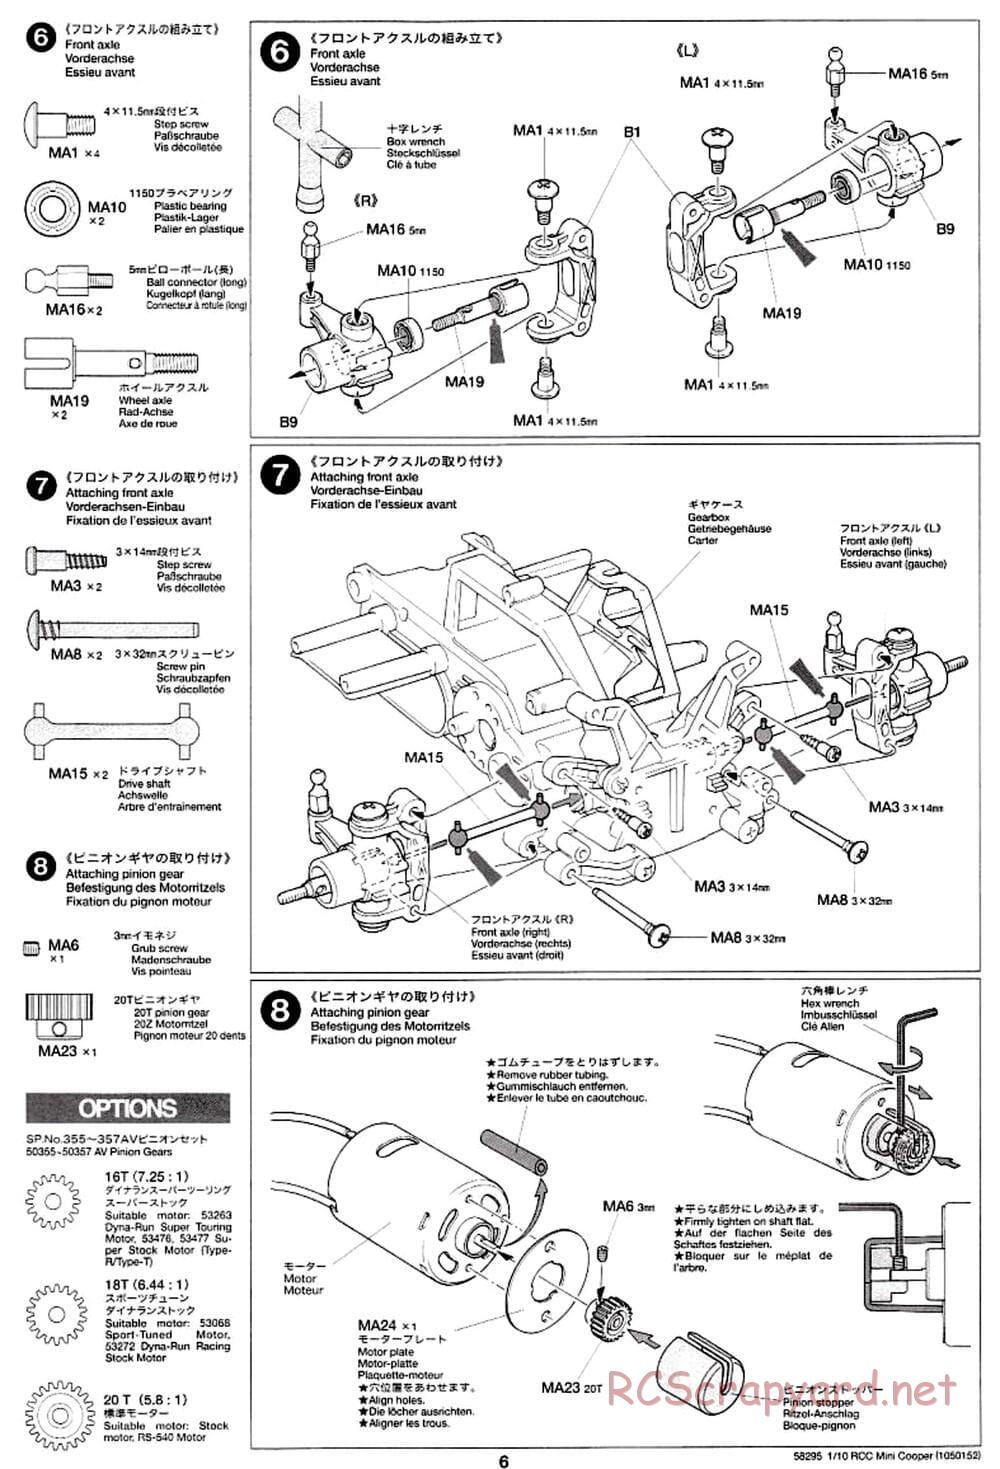 Tamiya - Mini Cooper - M03L Chassis - Manual - Page 5